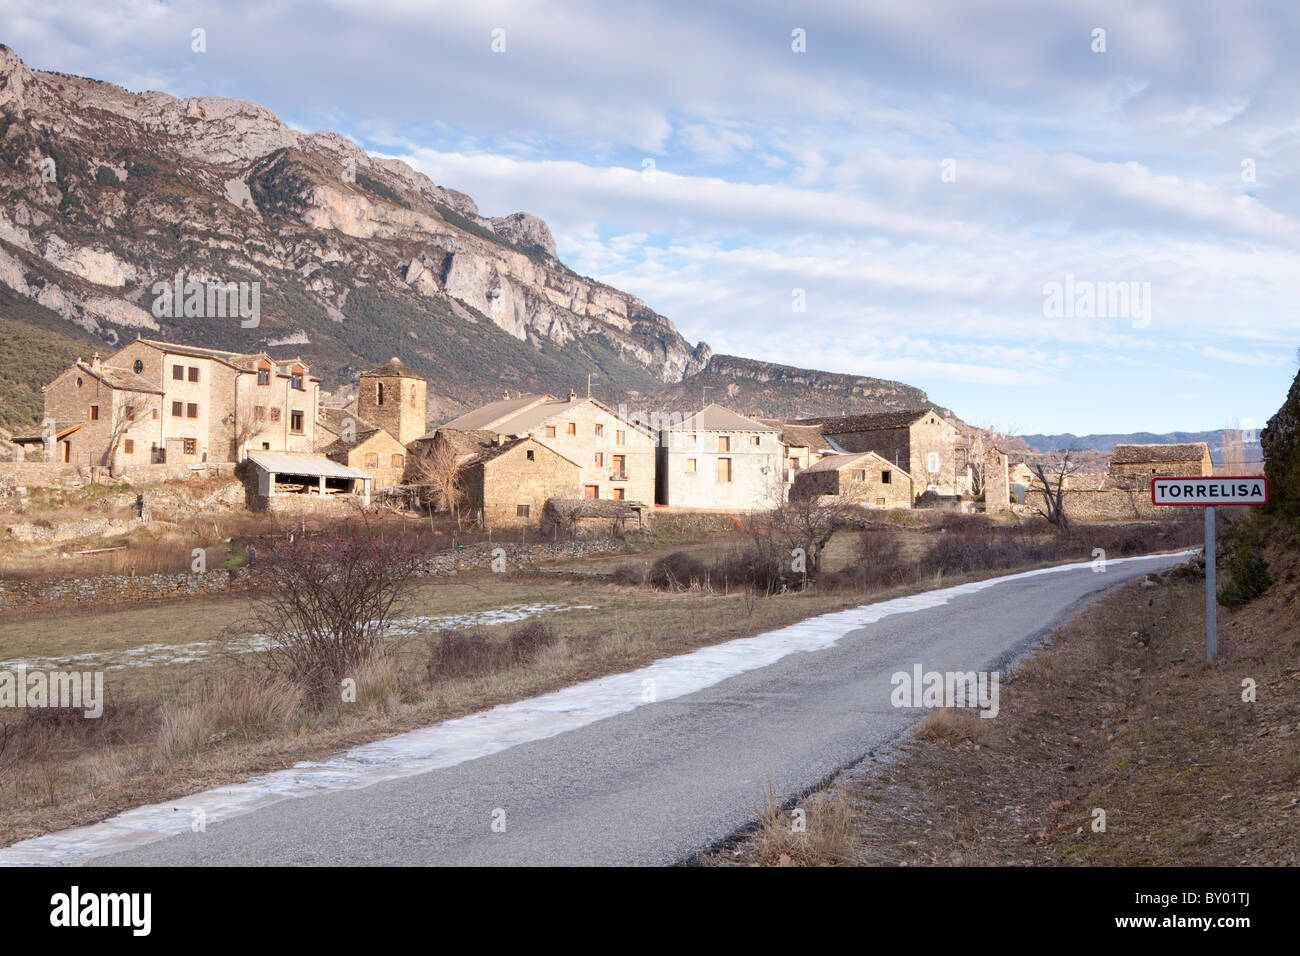 Torrelisa village, Huesca, Spain Stock Photo